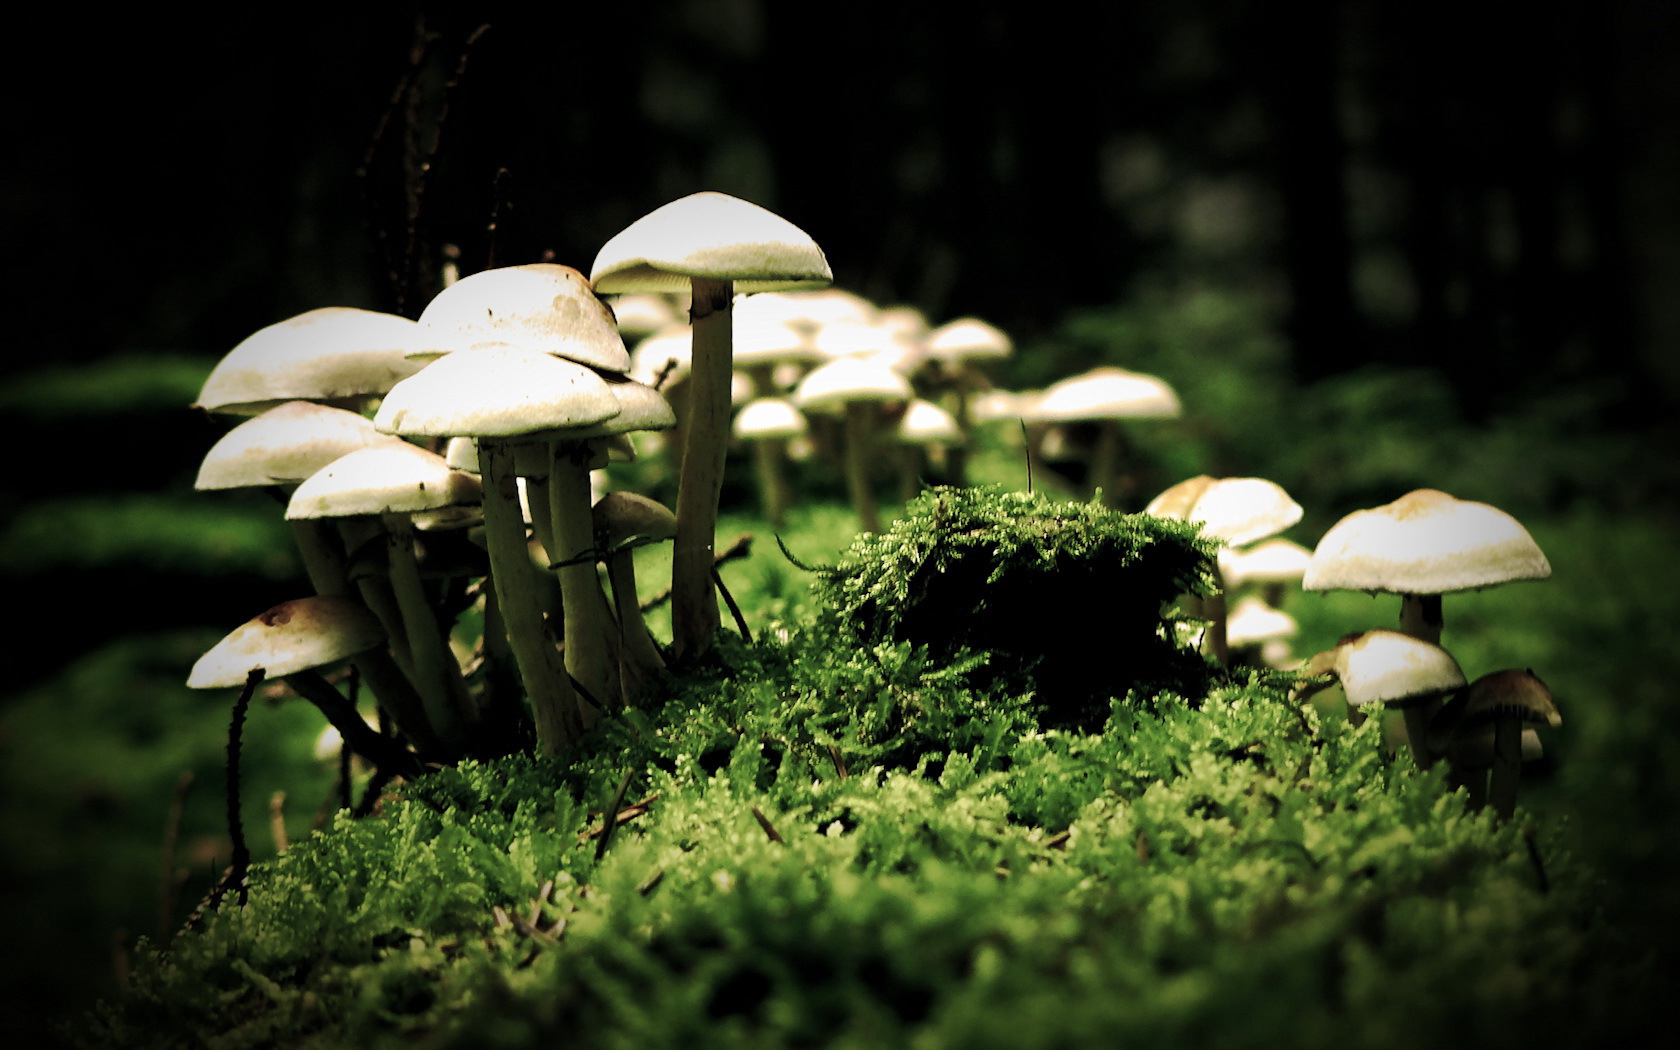 Family of mushrooms on moss